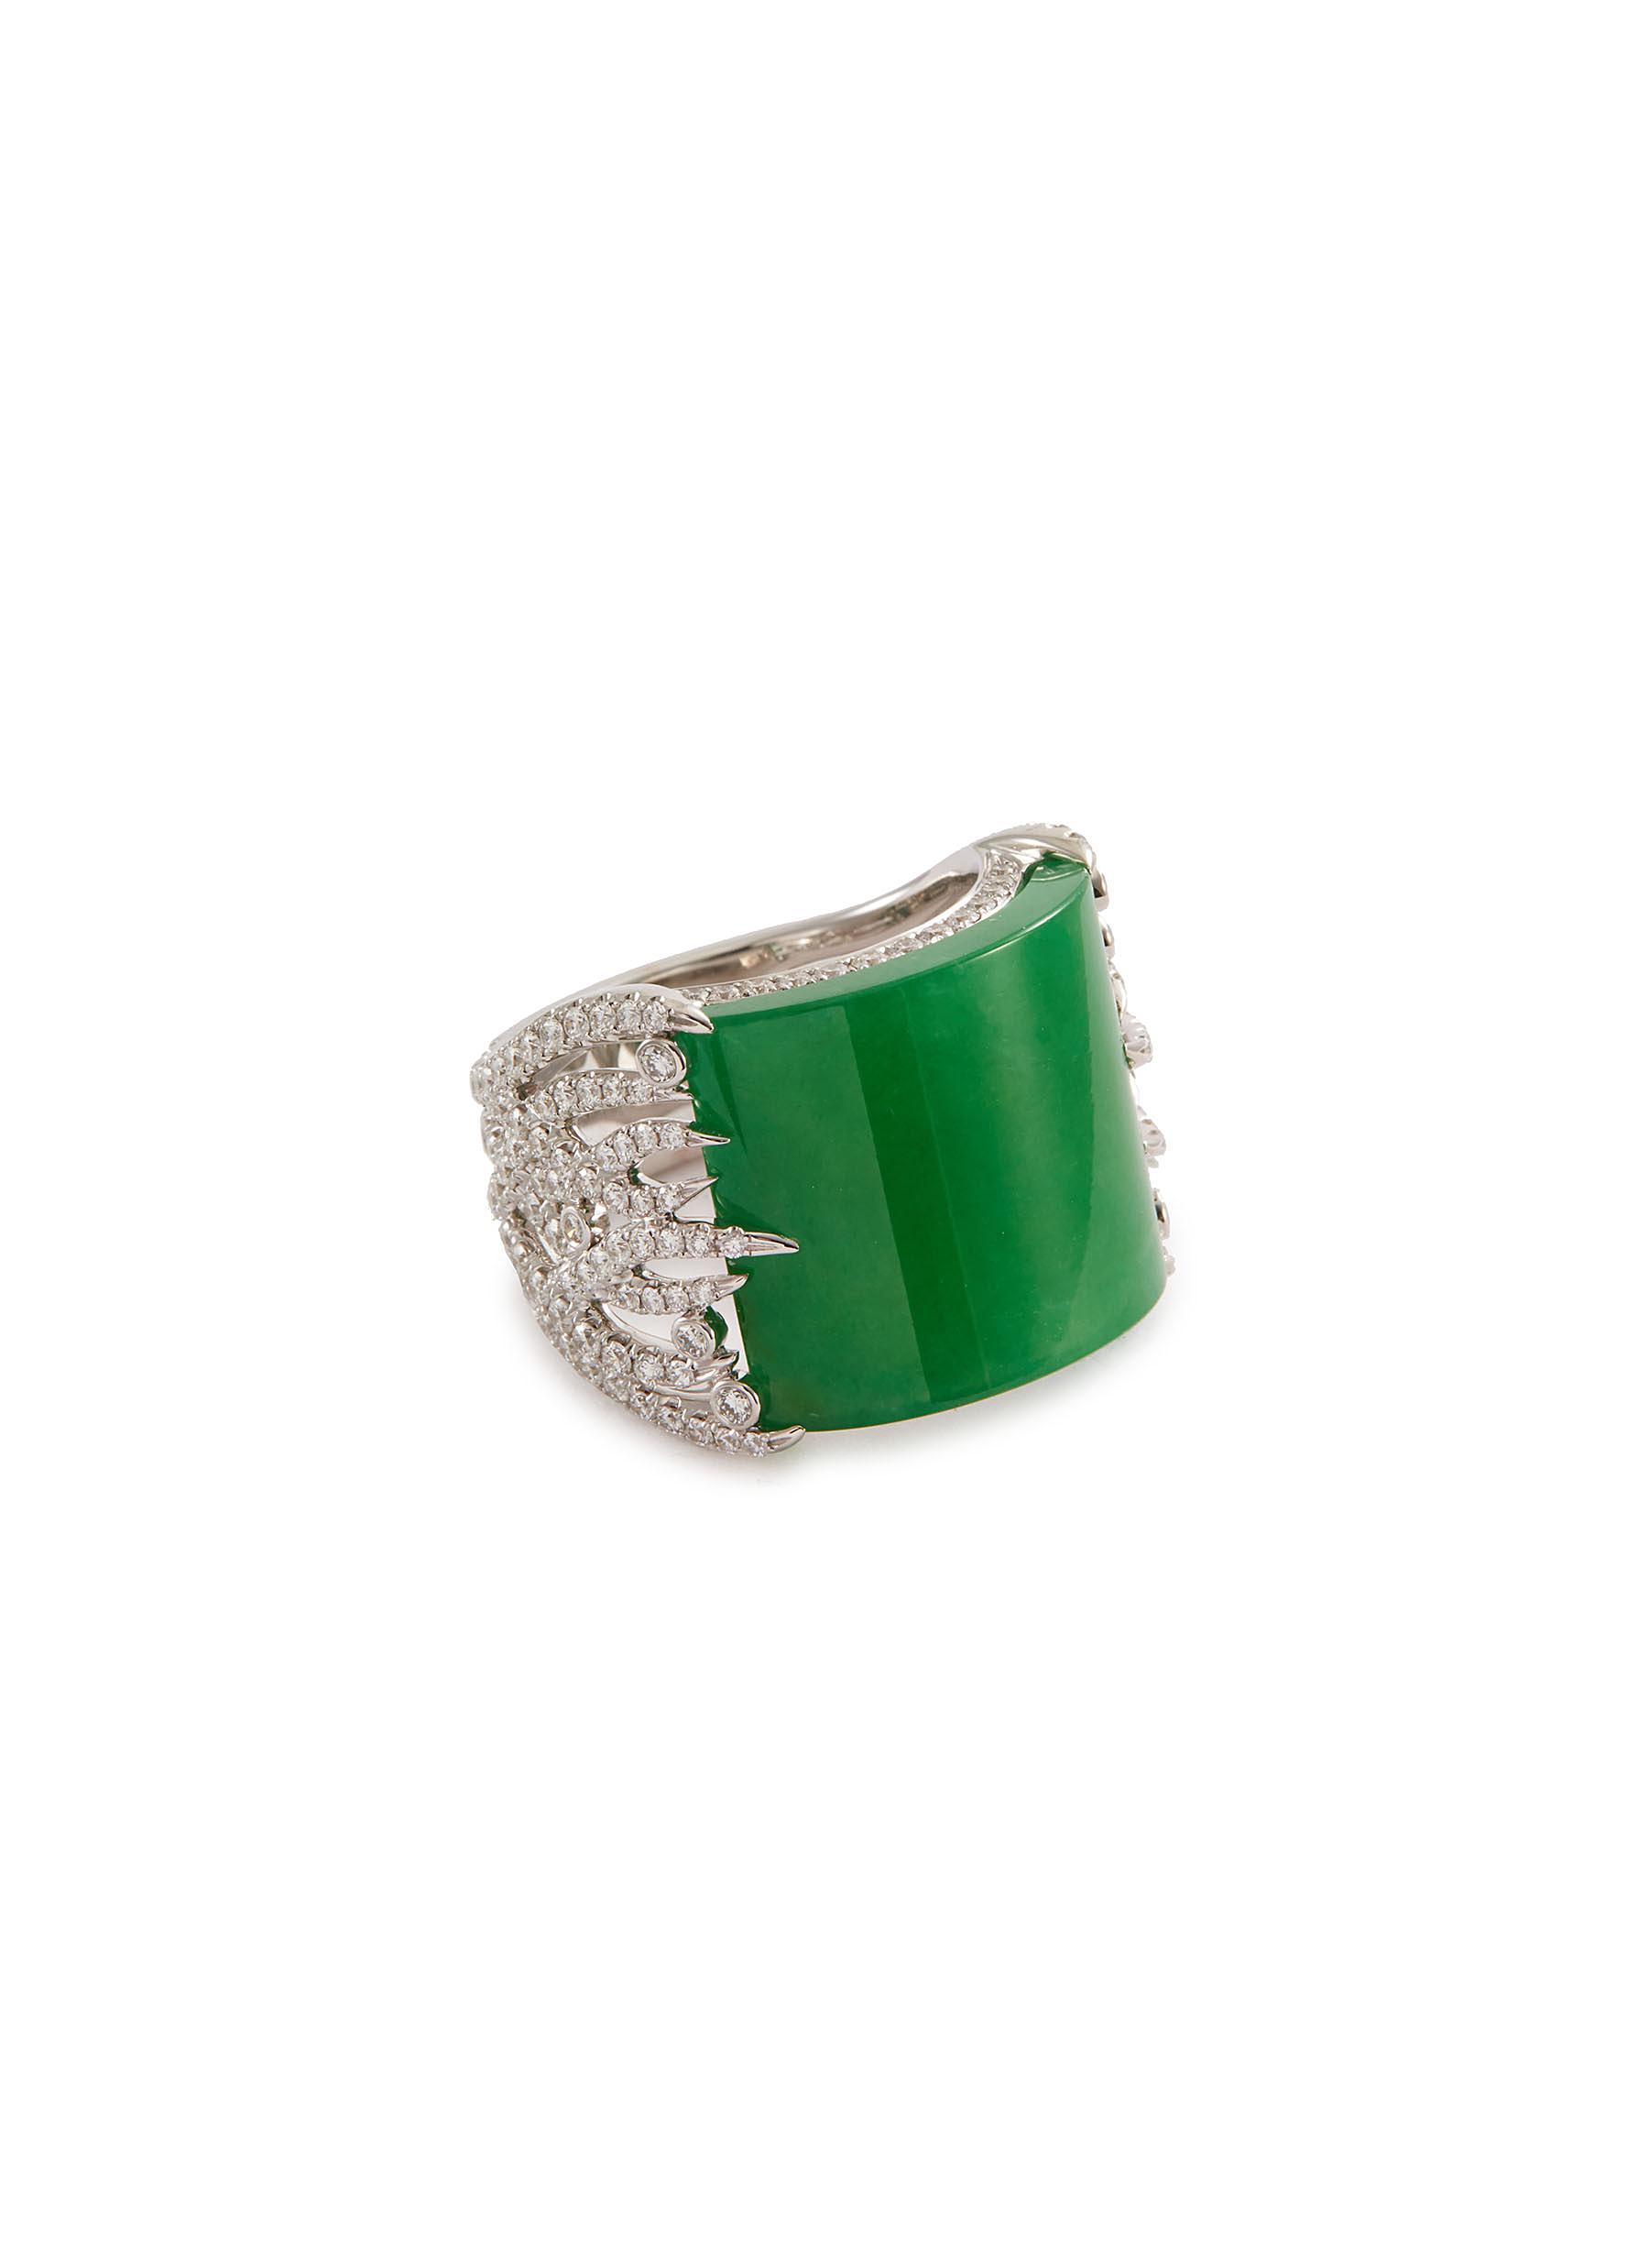 Diamond jadeite 18k white gold ring